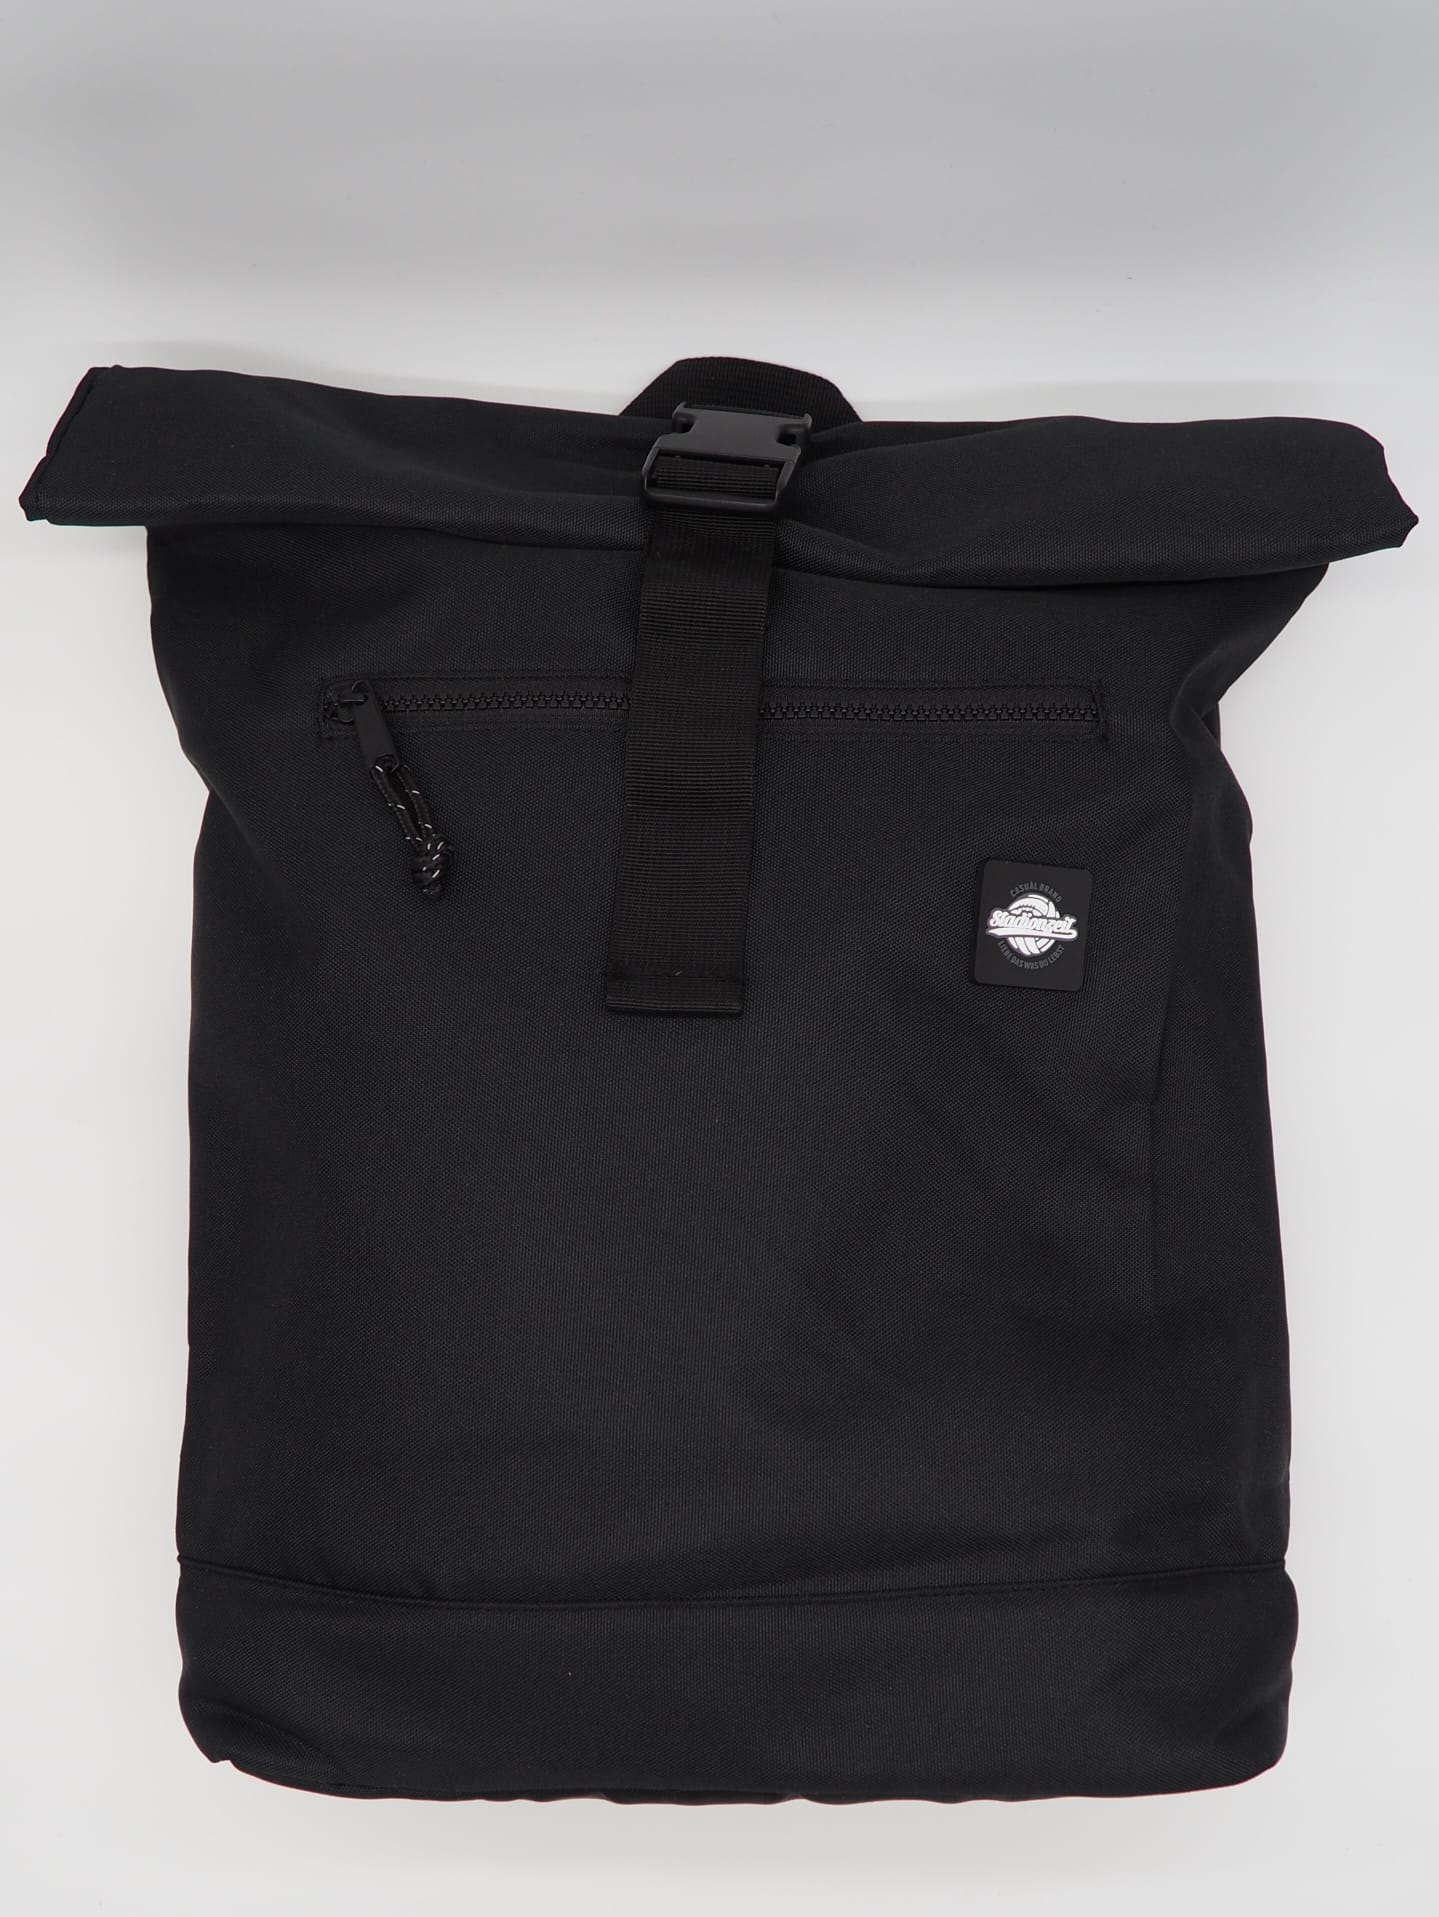 Backpack "Basic"